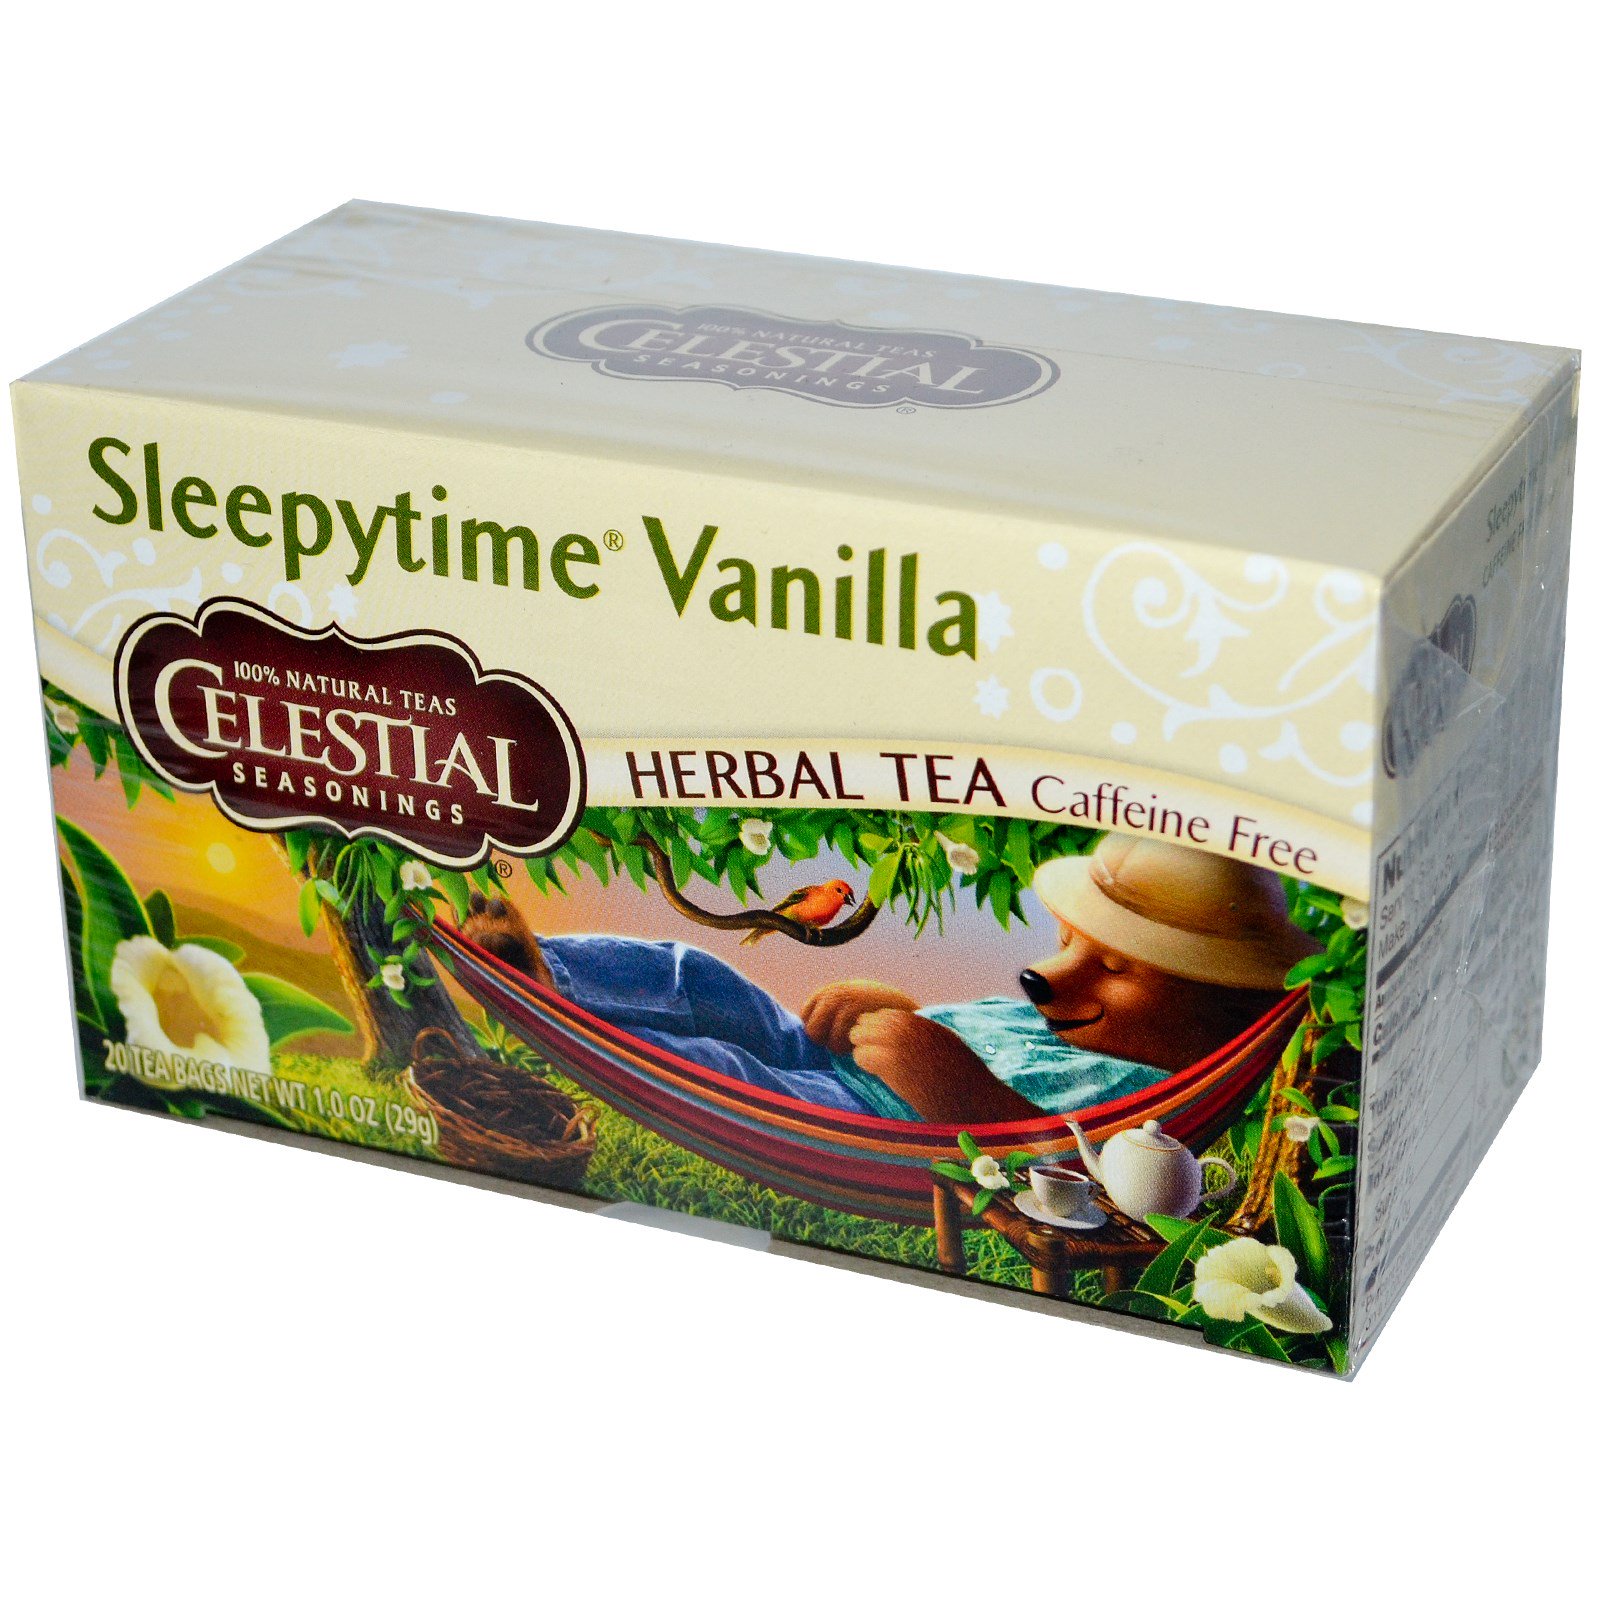 celestial seasonings sleepytime tea